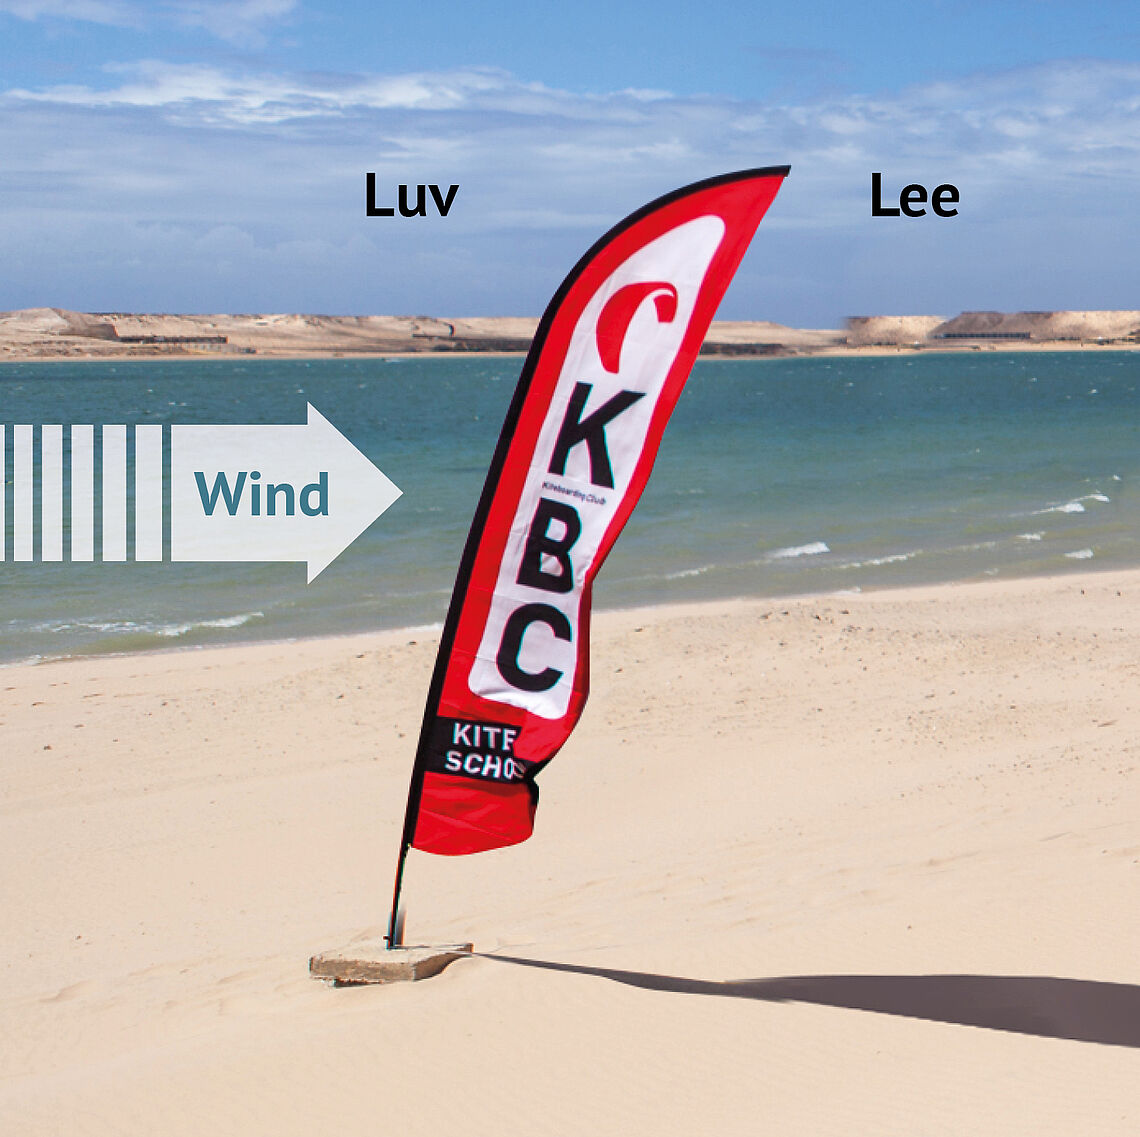 Windward and leeward in KBC Kitesurf Lexicon Technical Terms